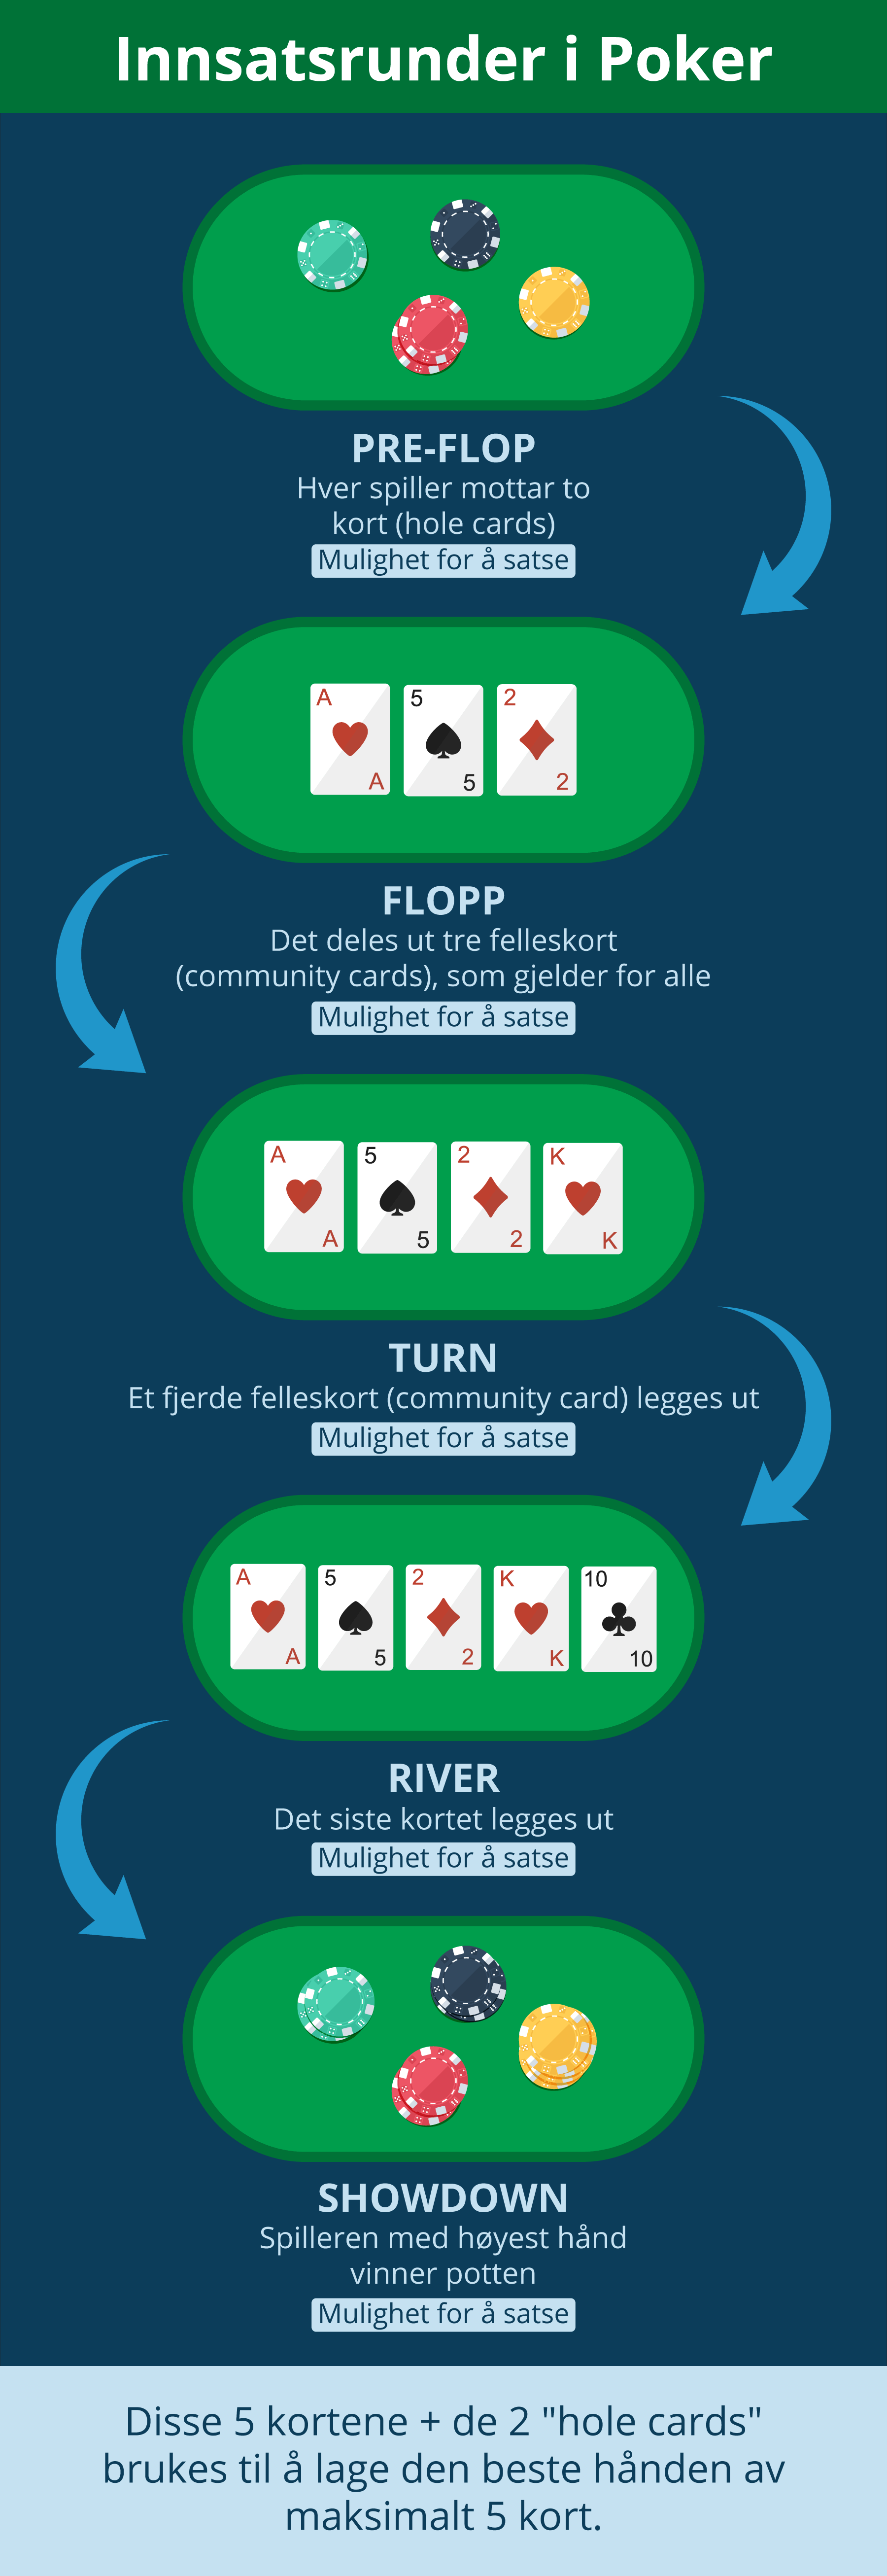 Innsatsrunder i Poker